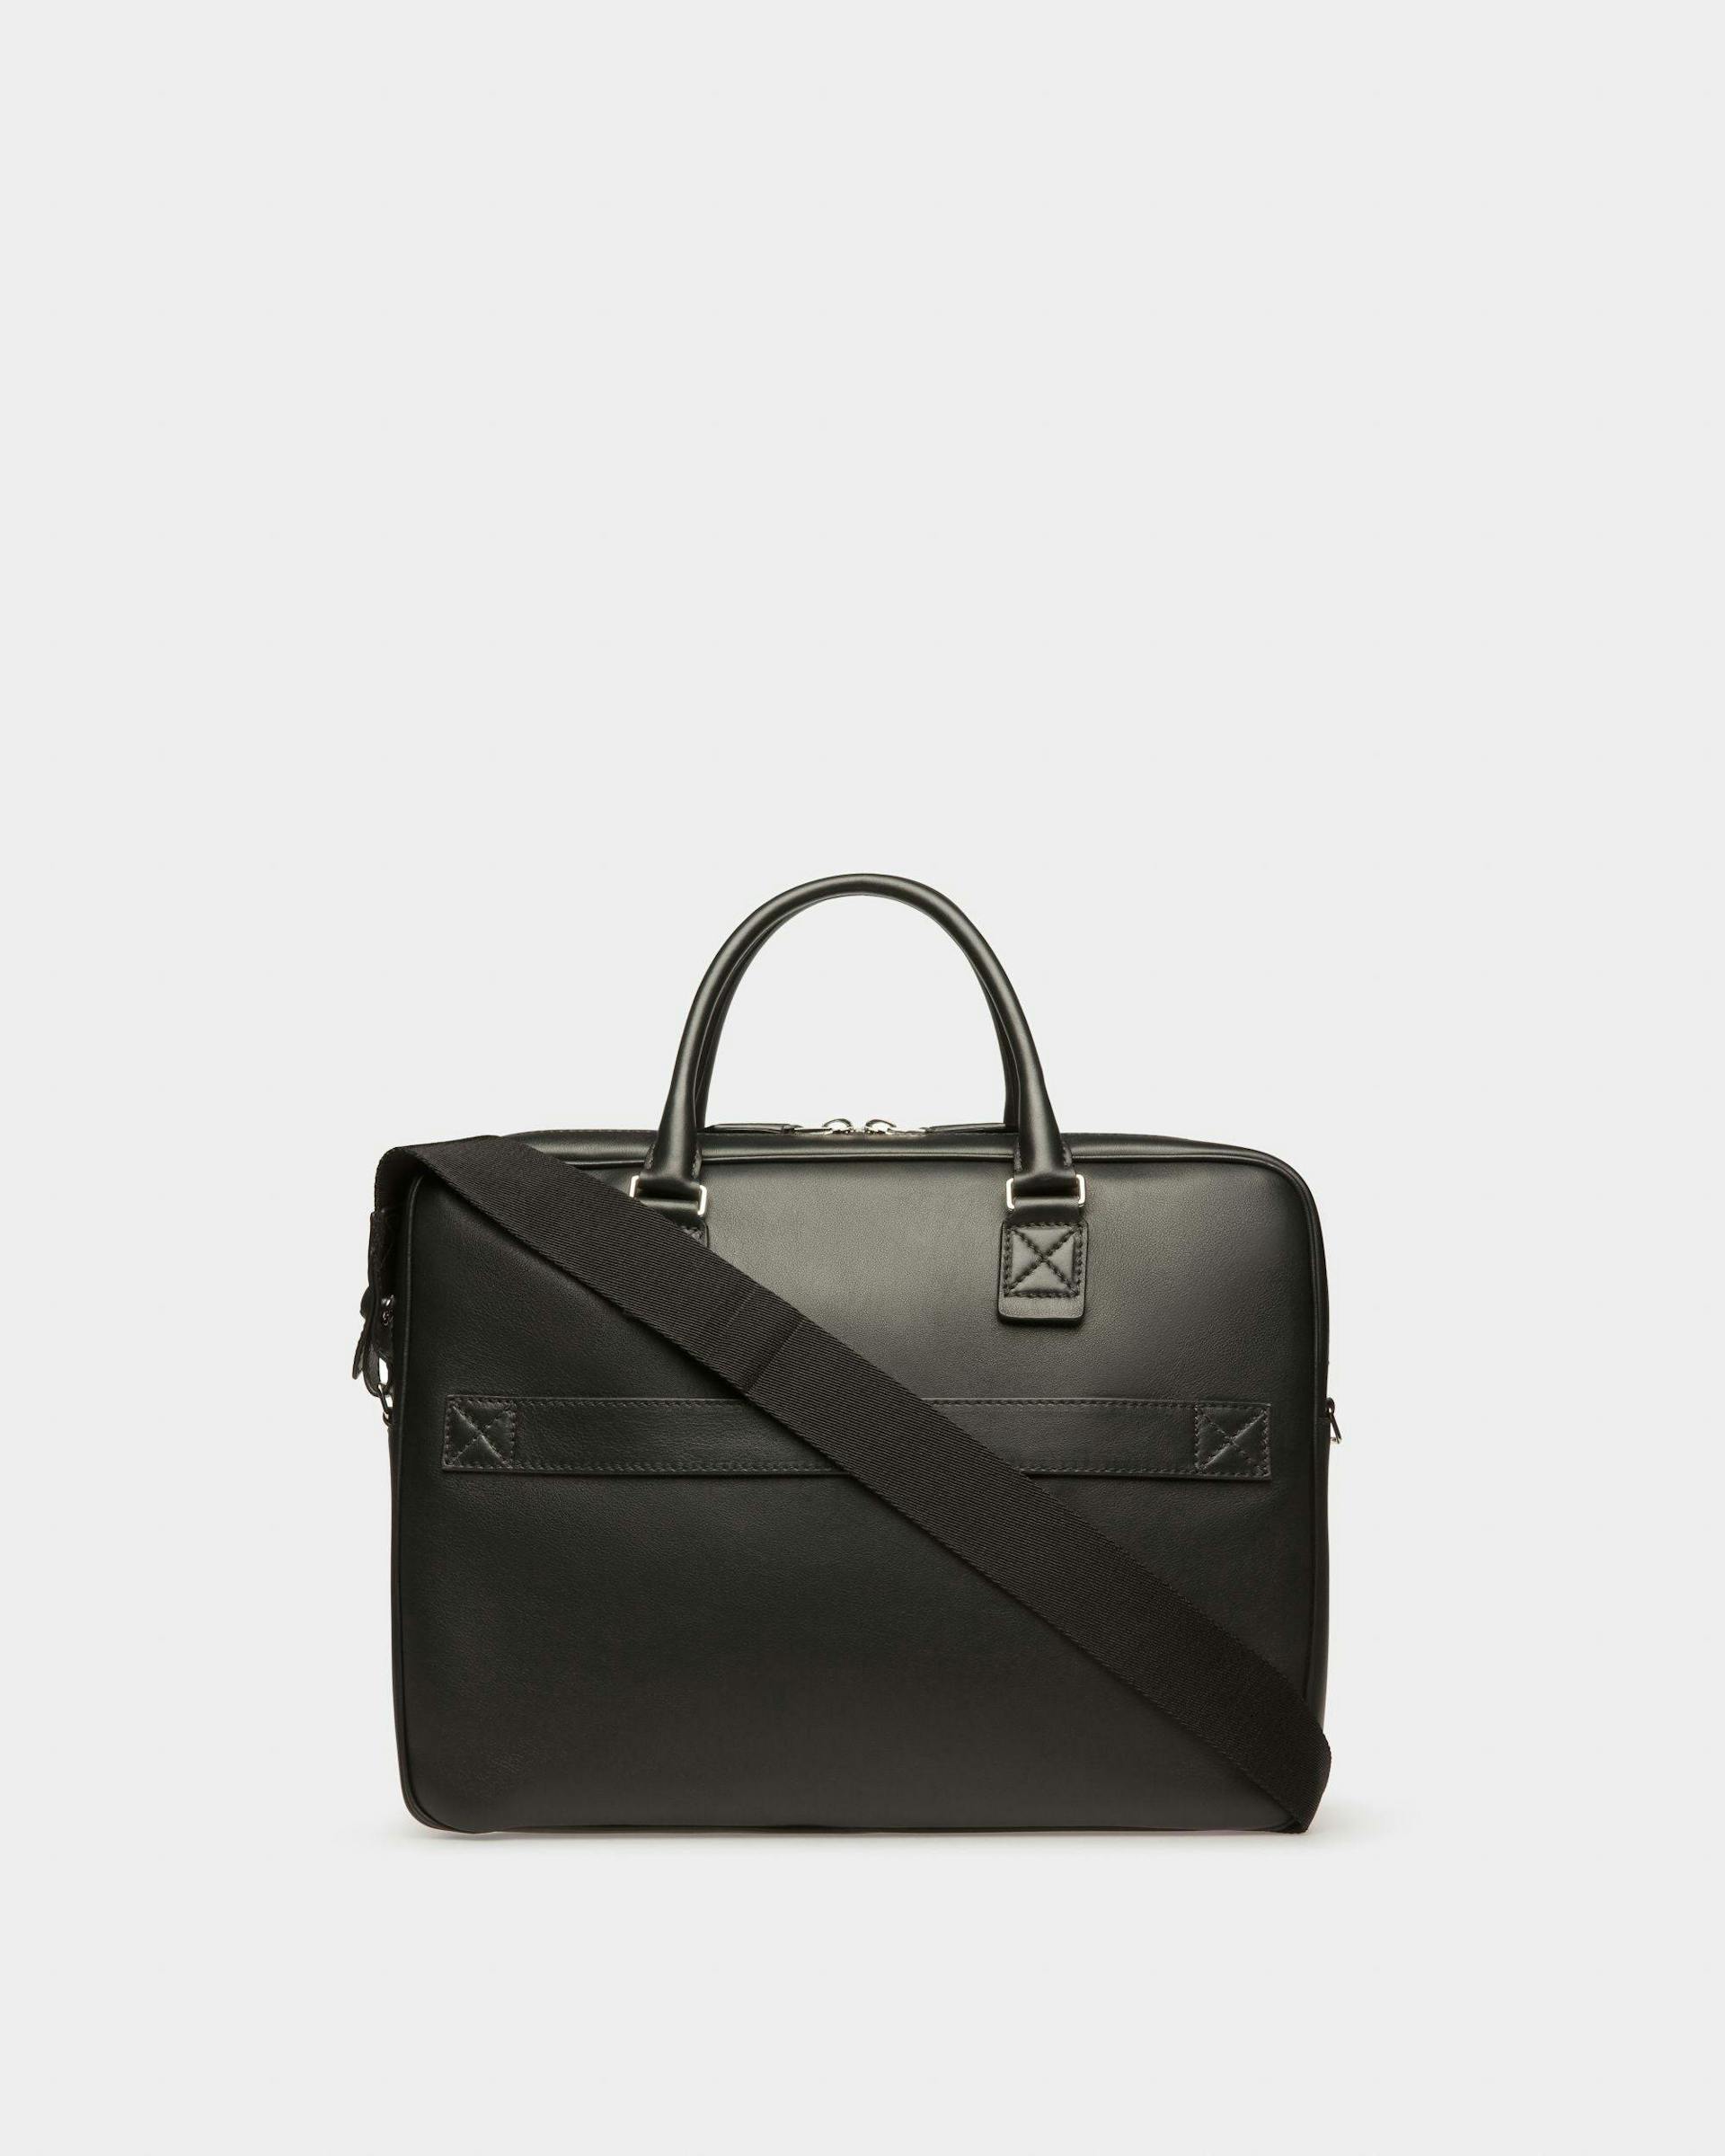 Hesines Leather Business Bag In Black & Green - Men's - Bally - 02